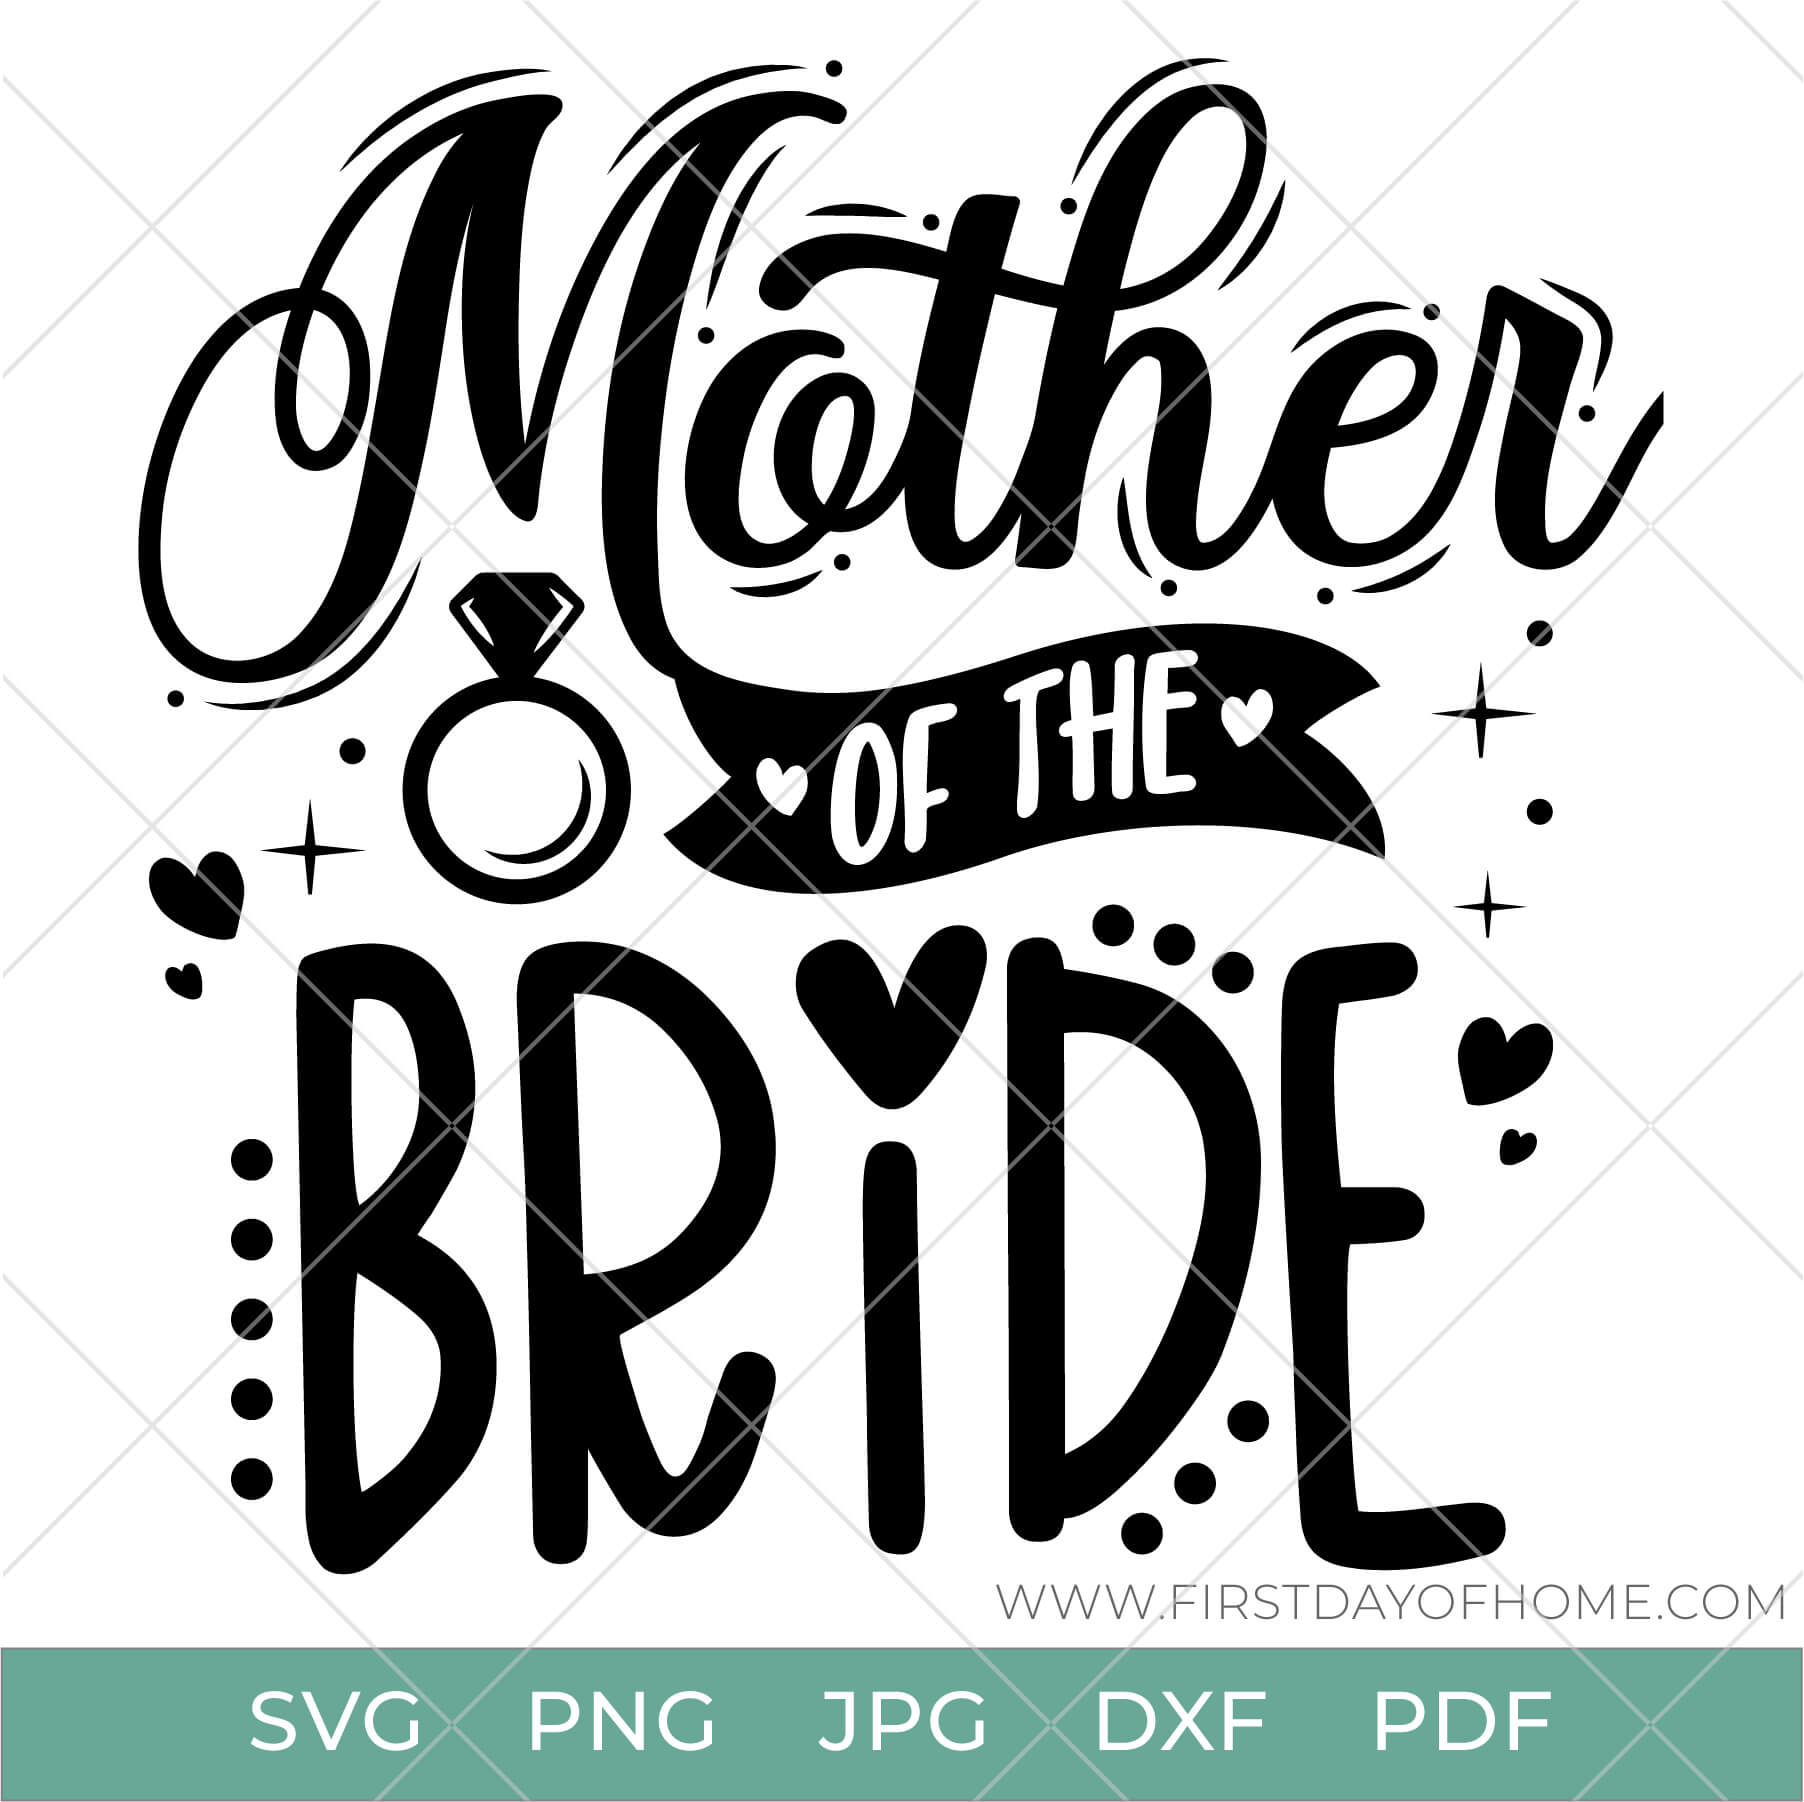 Bride to Be [Digital Download]